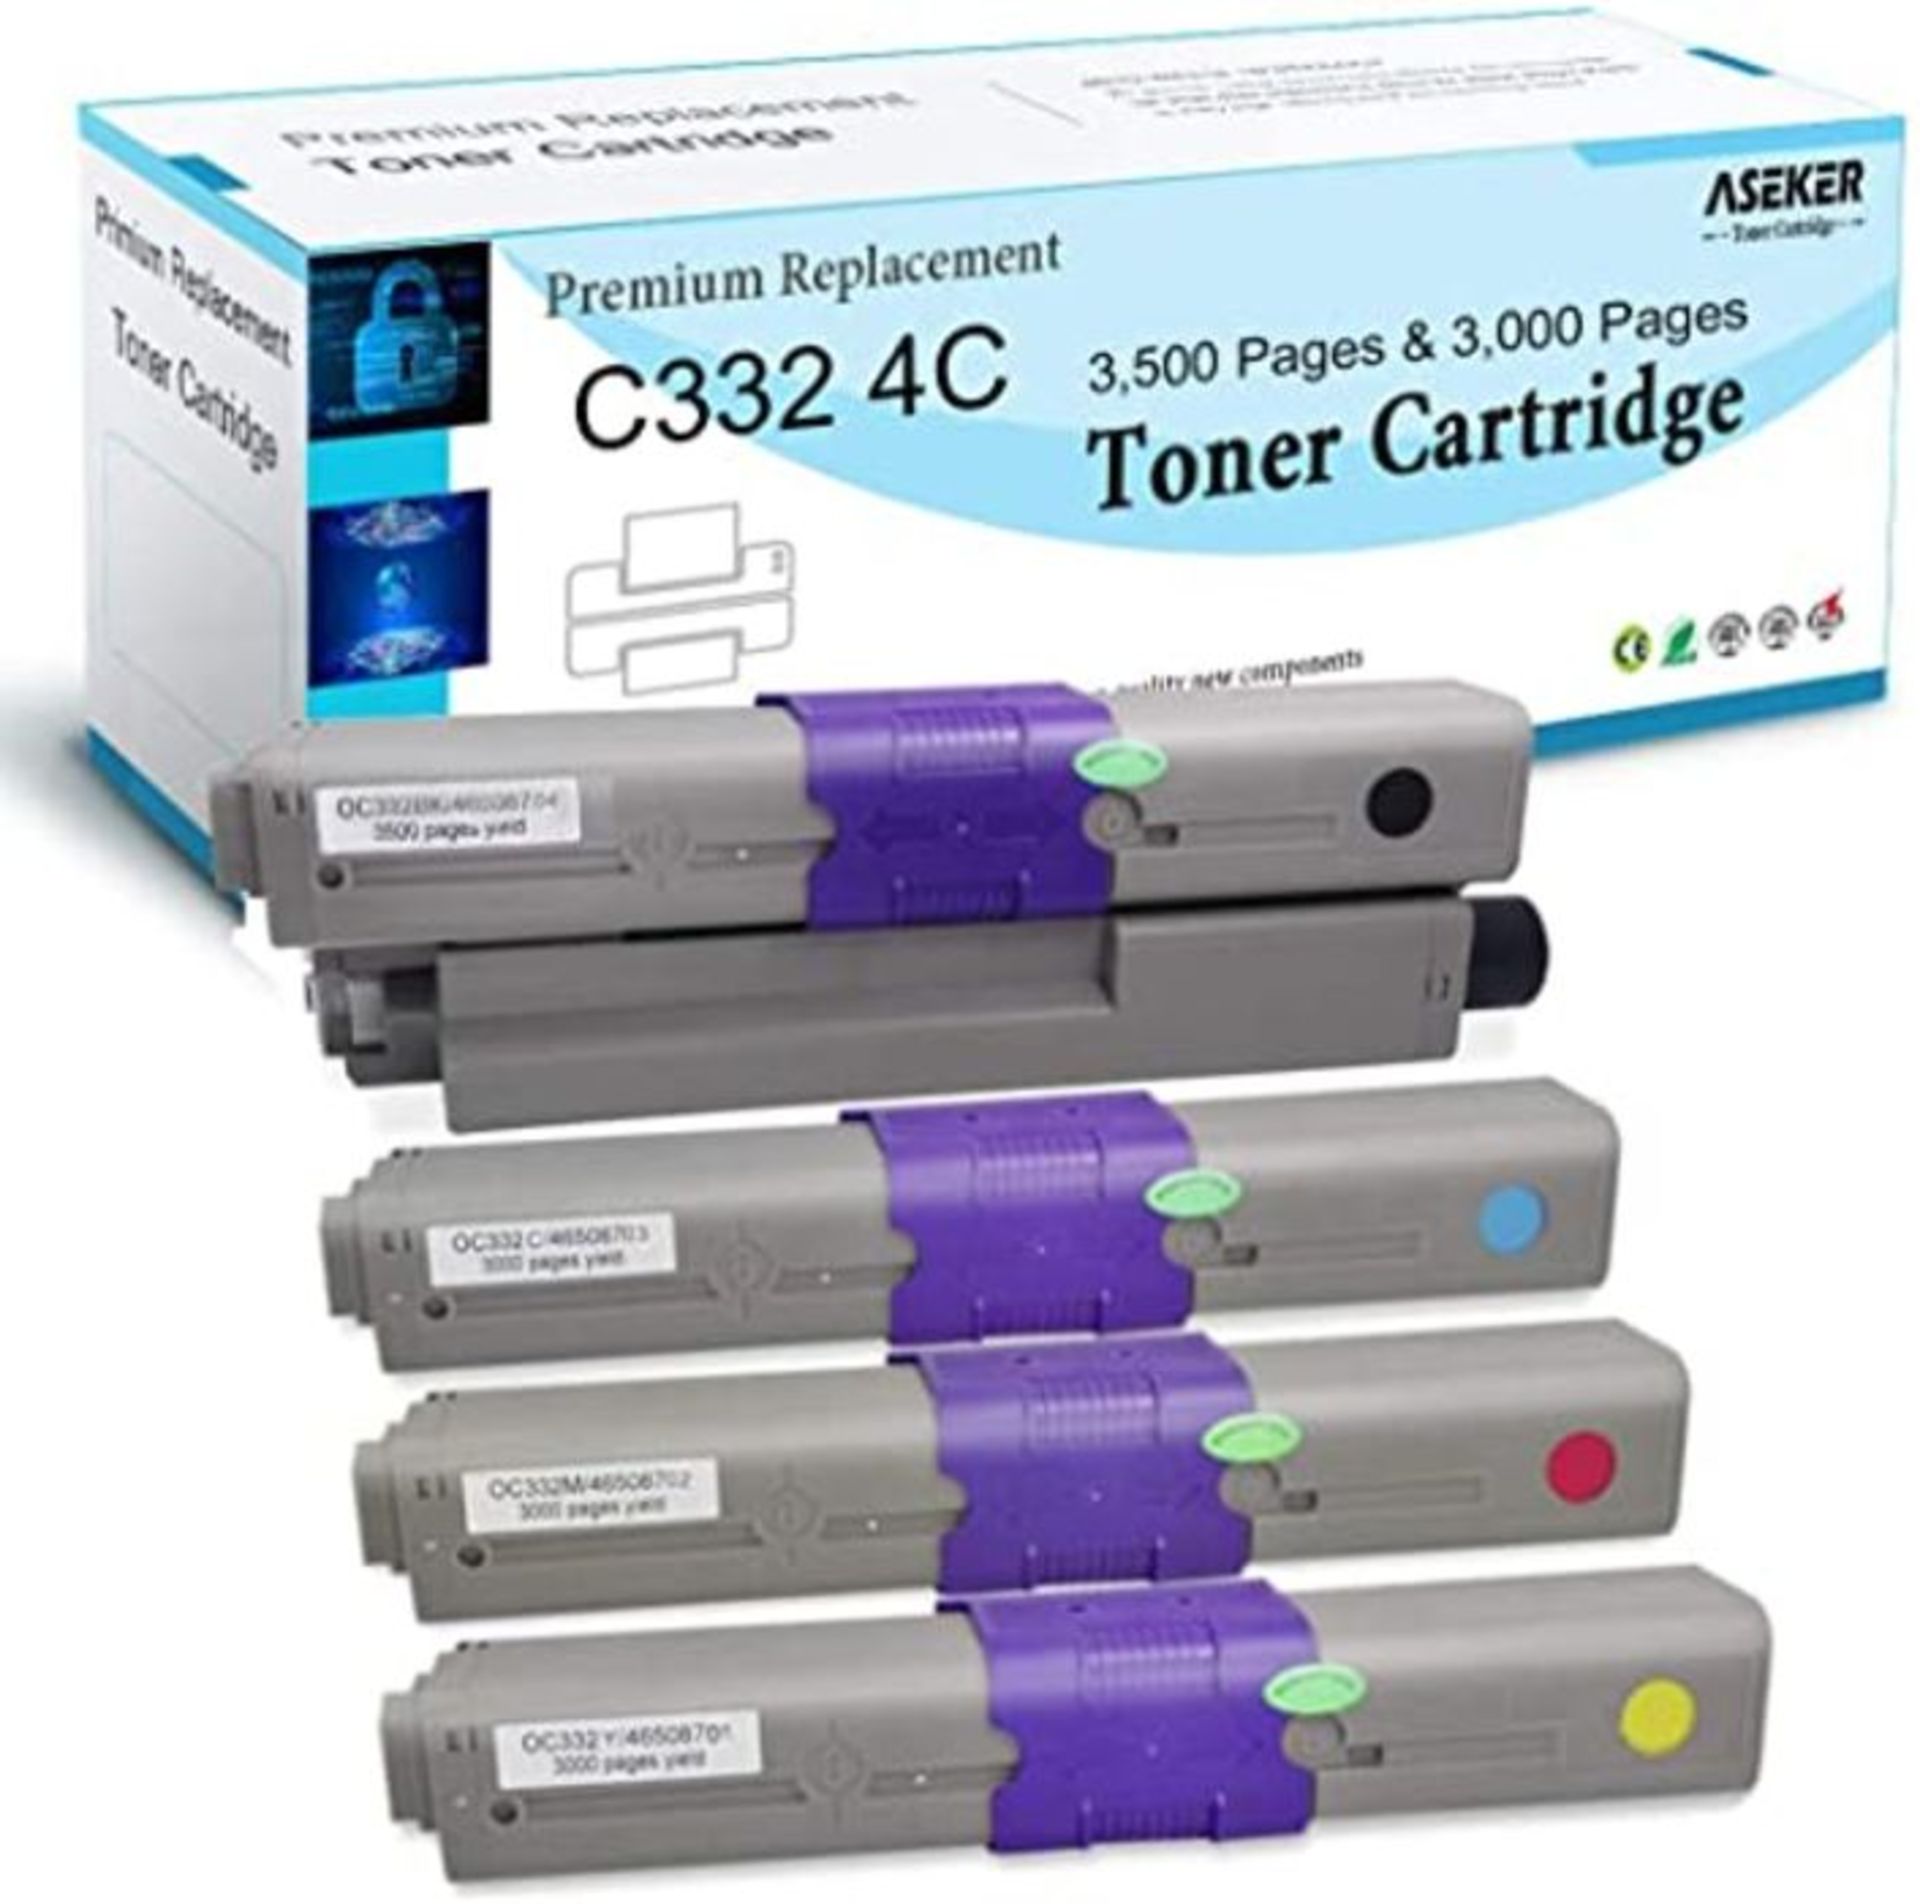 4 Colors Compatible Toner Cartridge for Oki C332 C332dn C332dnw MC363 MC363dn MC363dnw